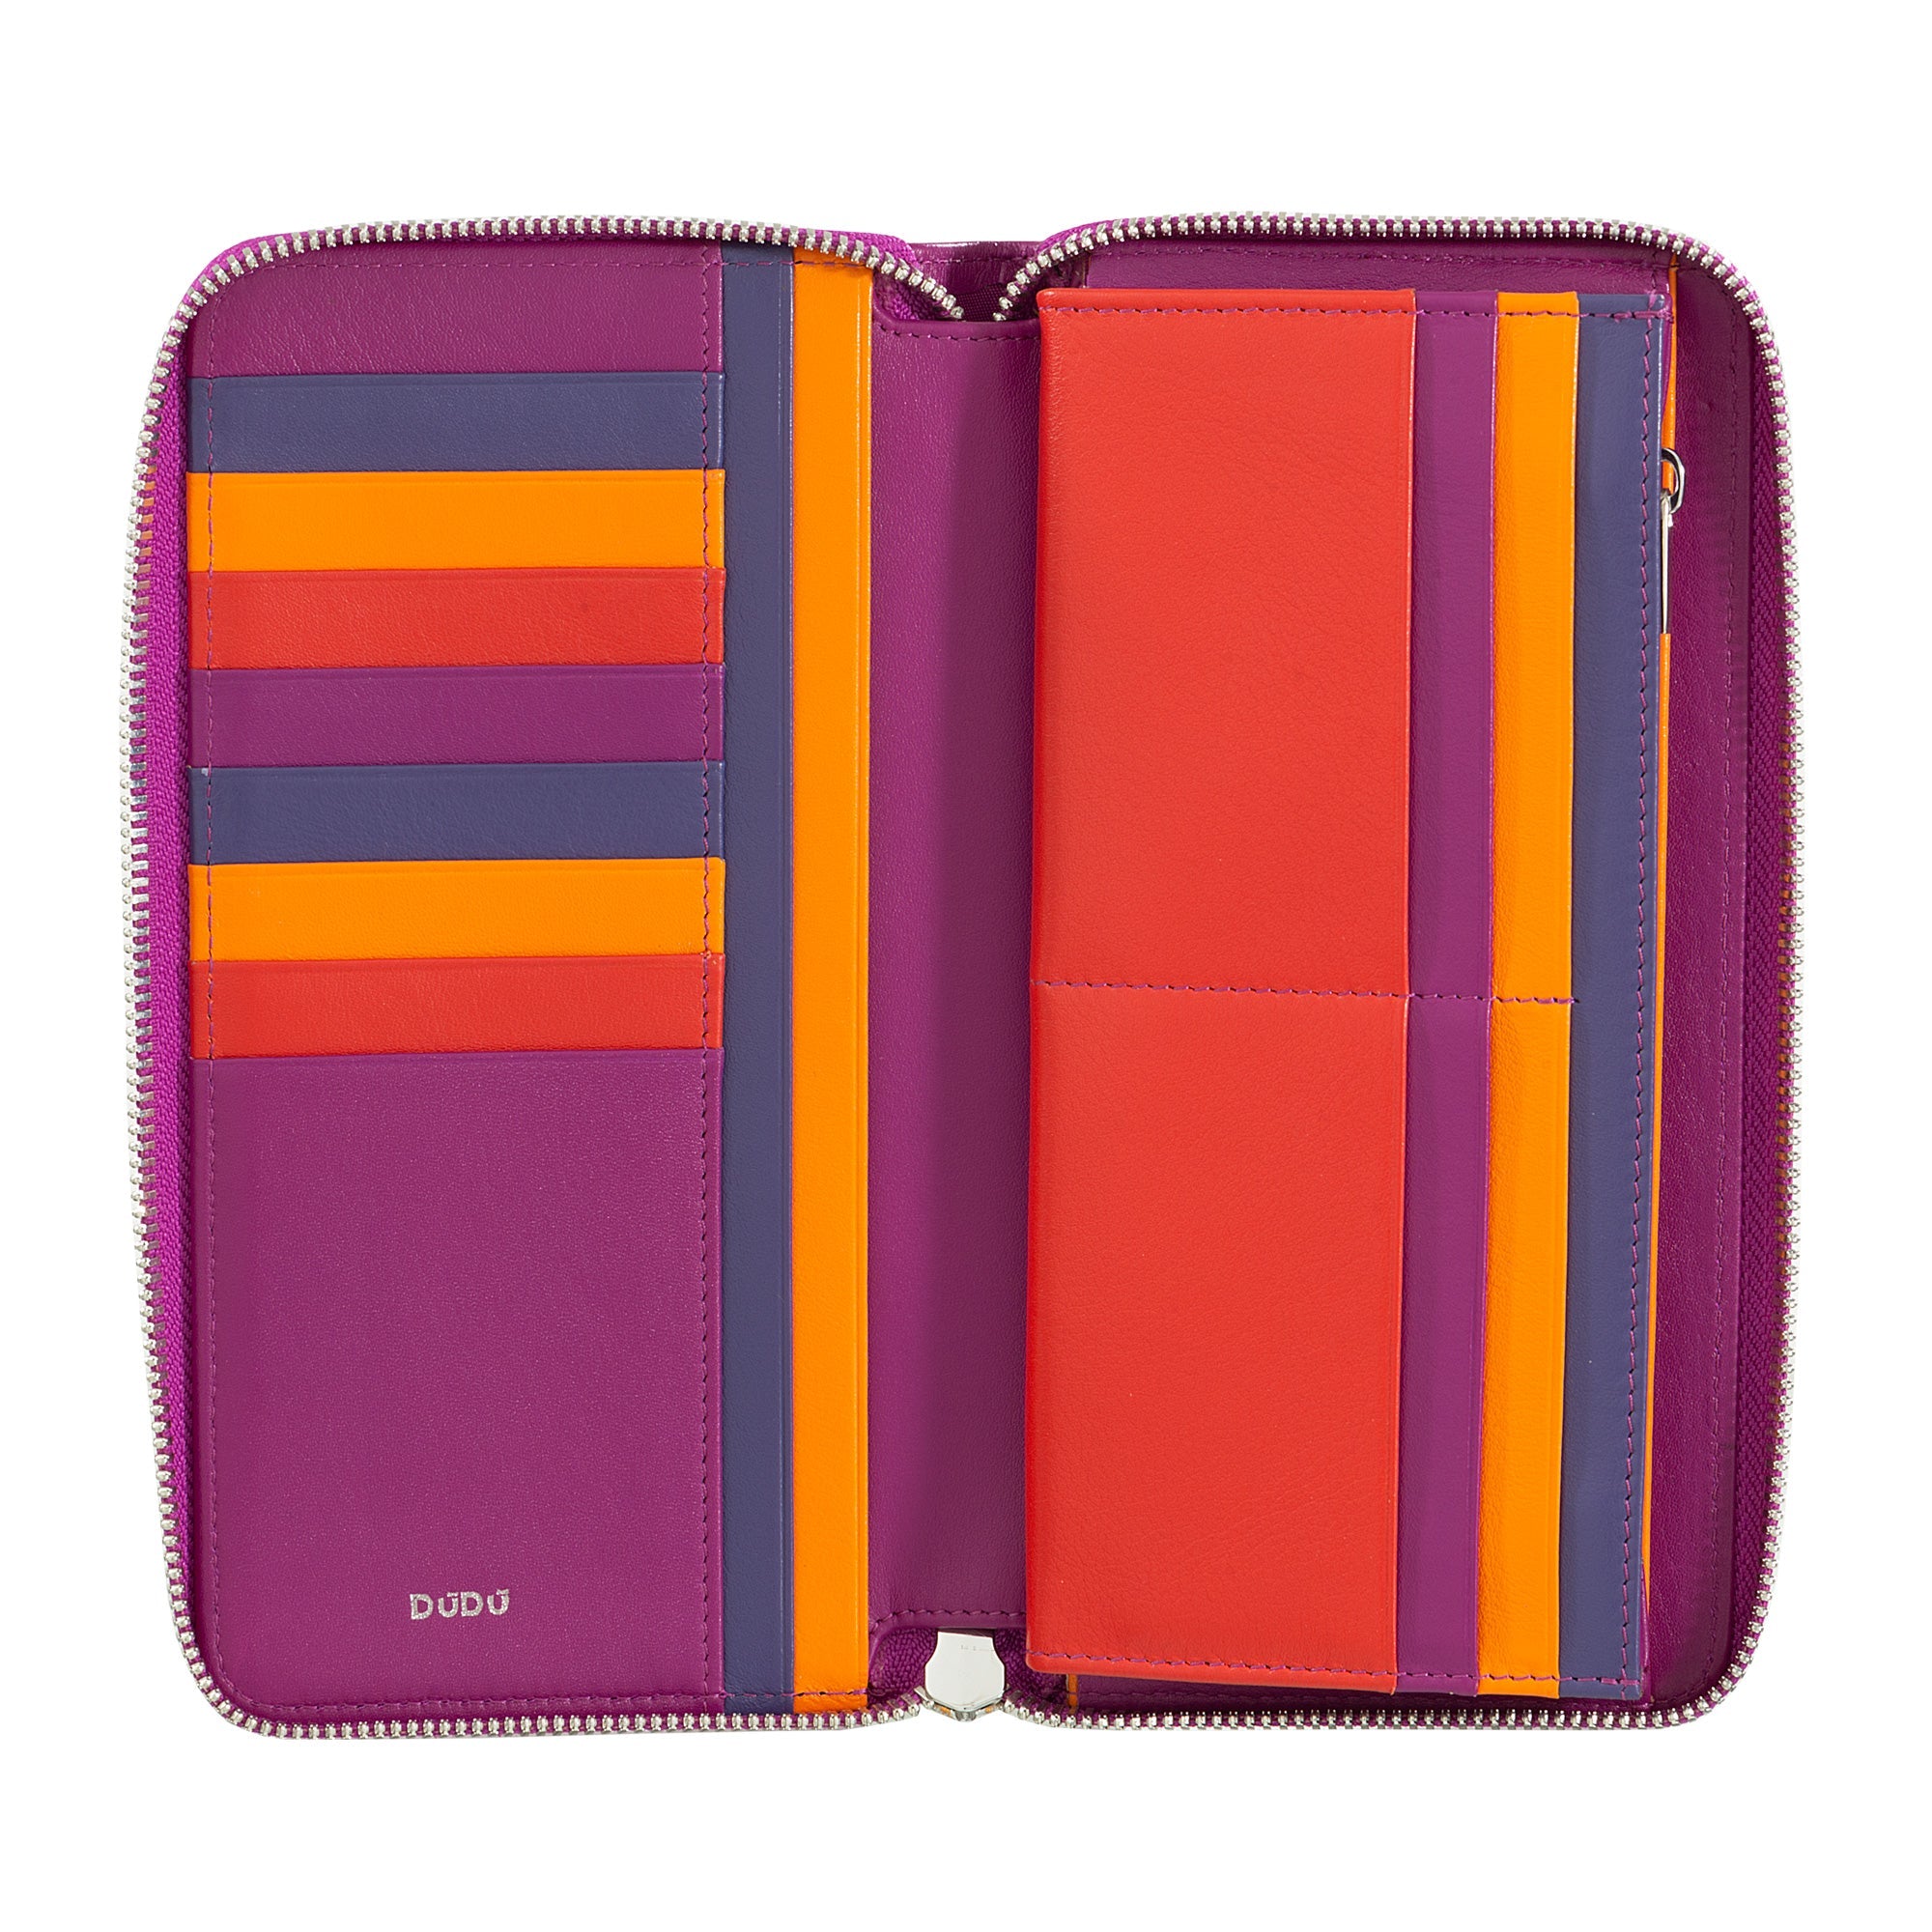 DuDu USTICA Multicolor Leather Wallet